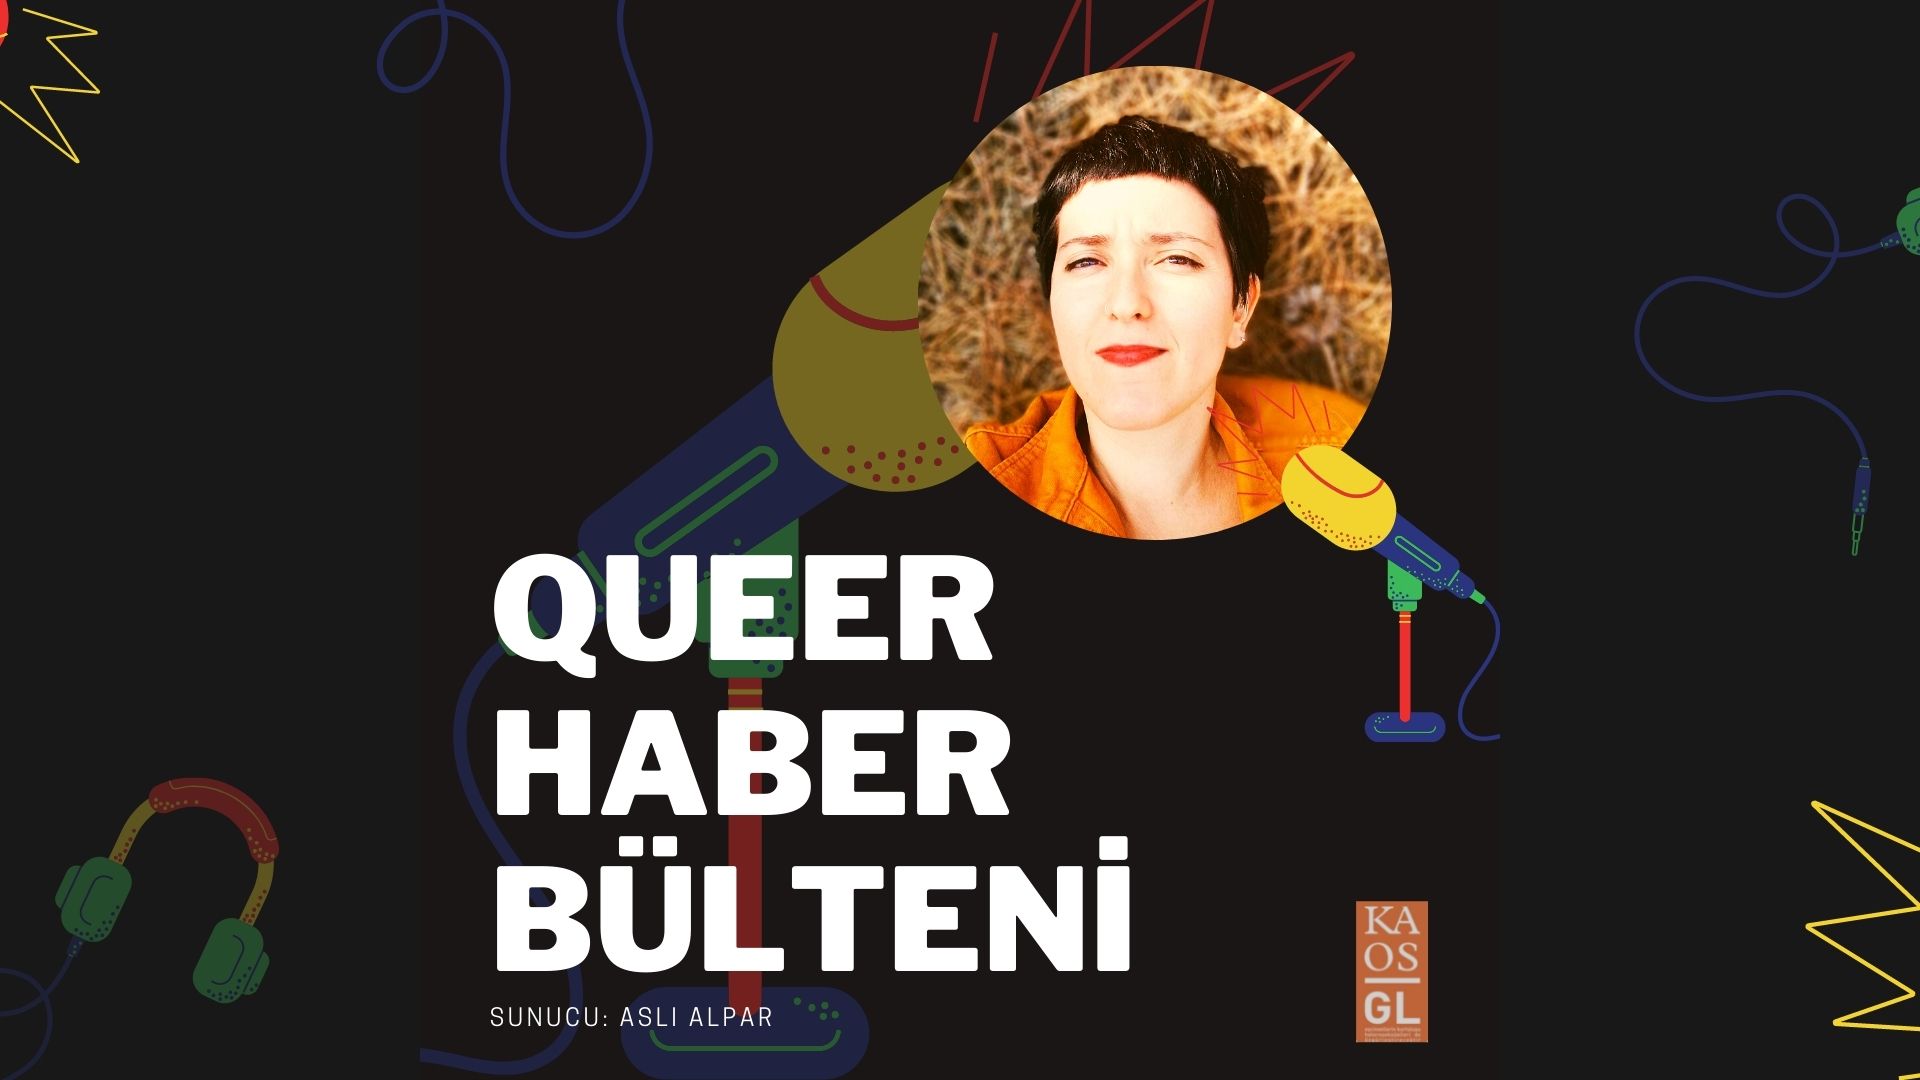 Podcast: 1-10 Eylül Queer Haber Bülteni Kaos GL - LGBTİ+ Haber Portalı